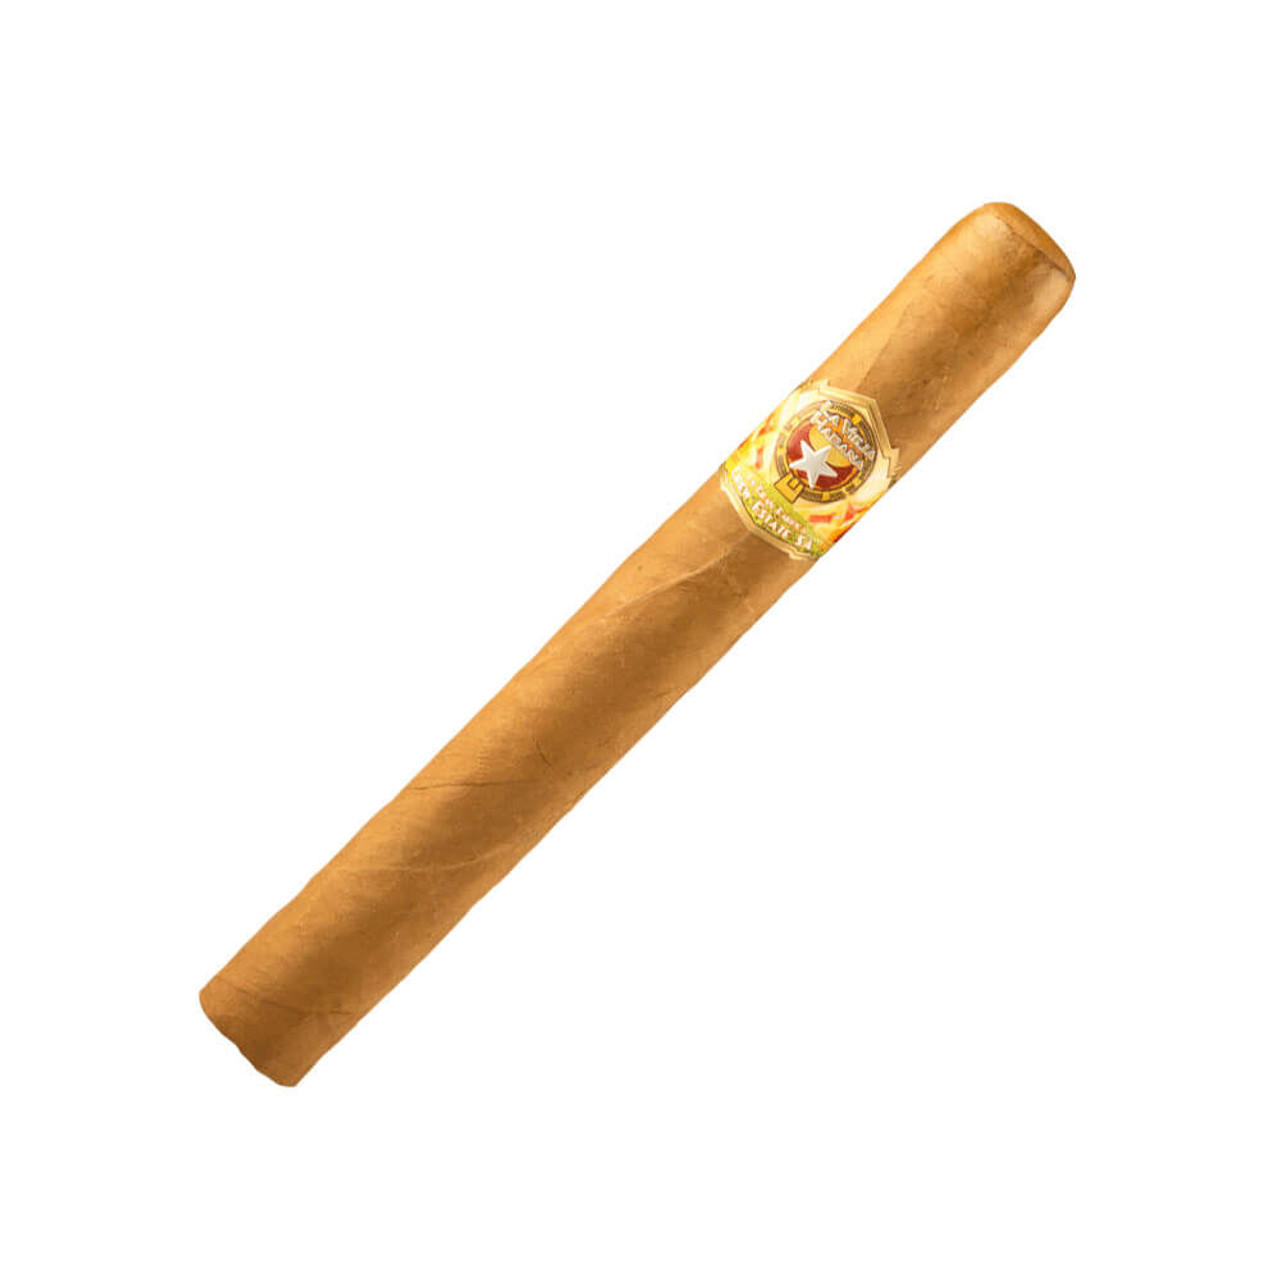 La Vieja Habana Celebracion CT Cigars - 7 x 52 (Box of 20)